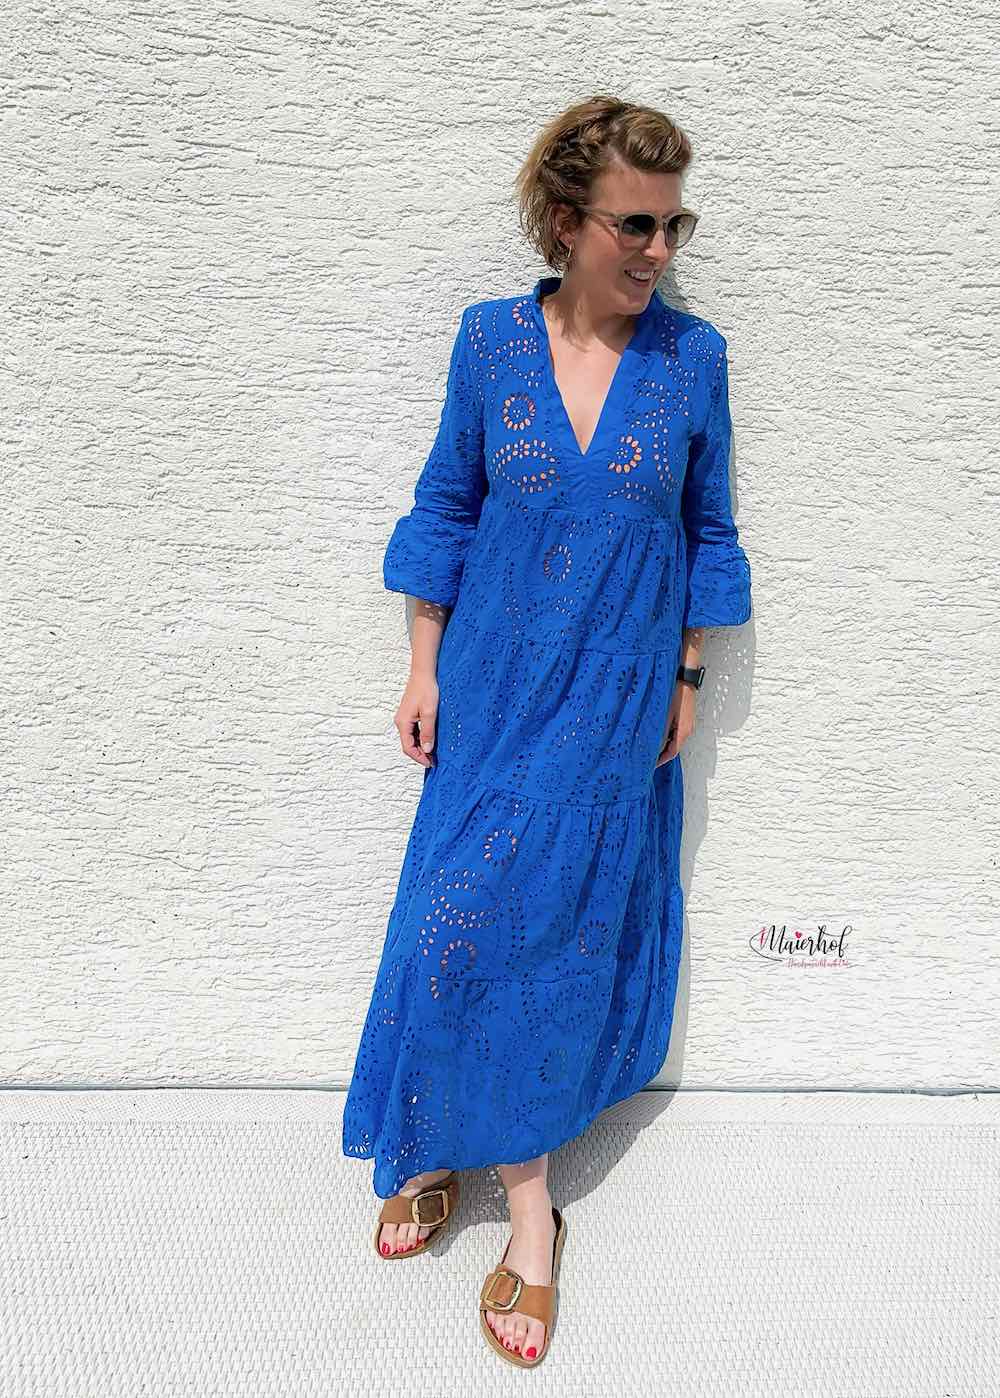 Schnittmuster Kleid Francesca Lochstickerei Royalblau – 1